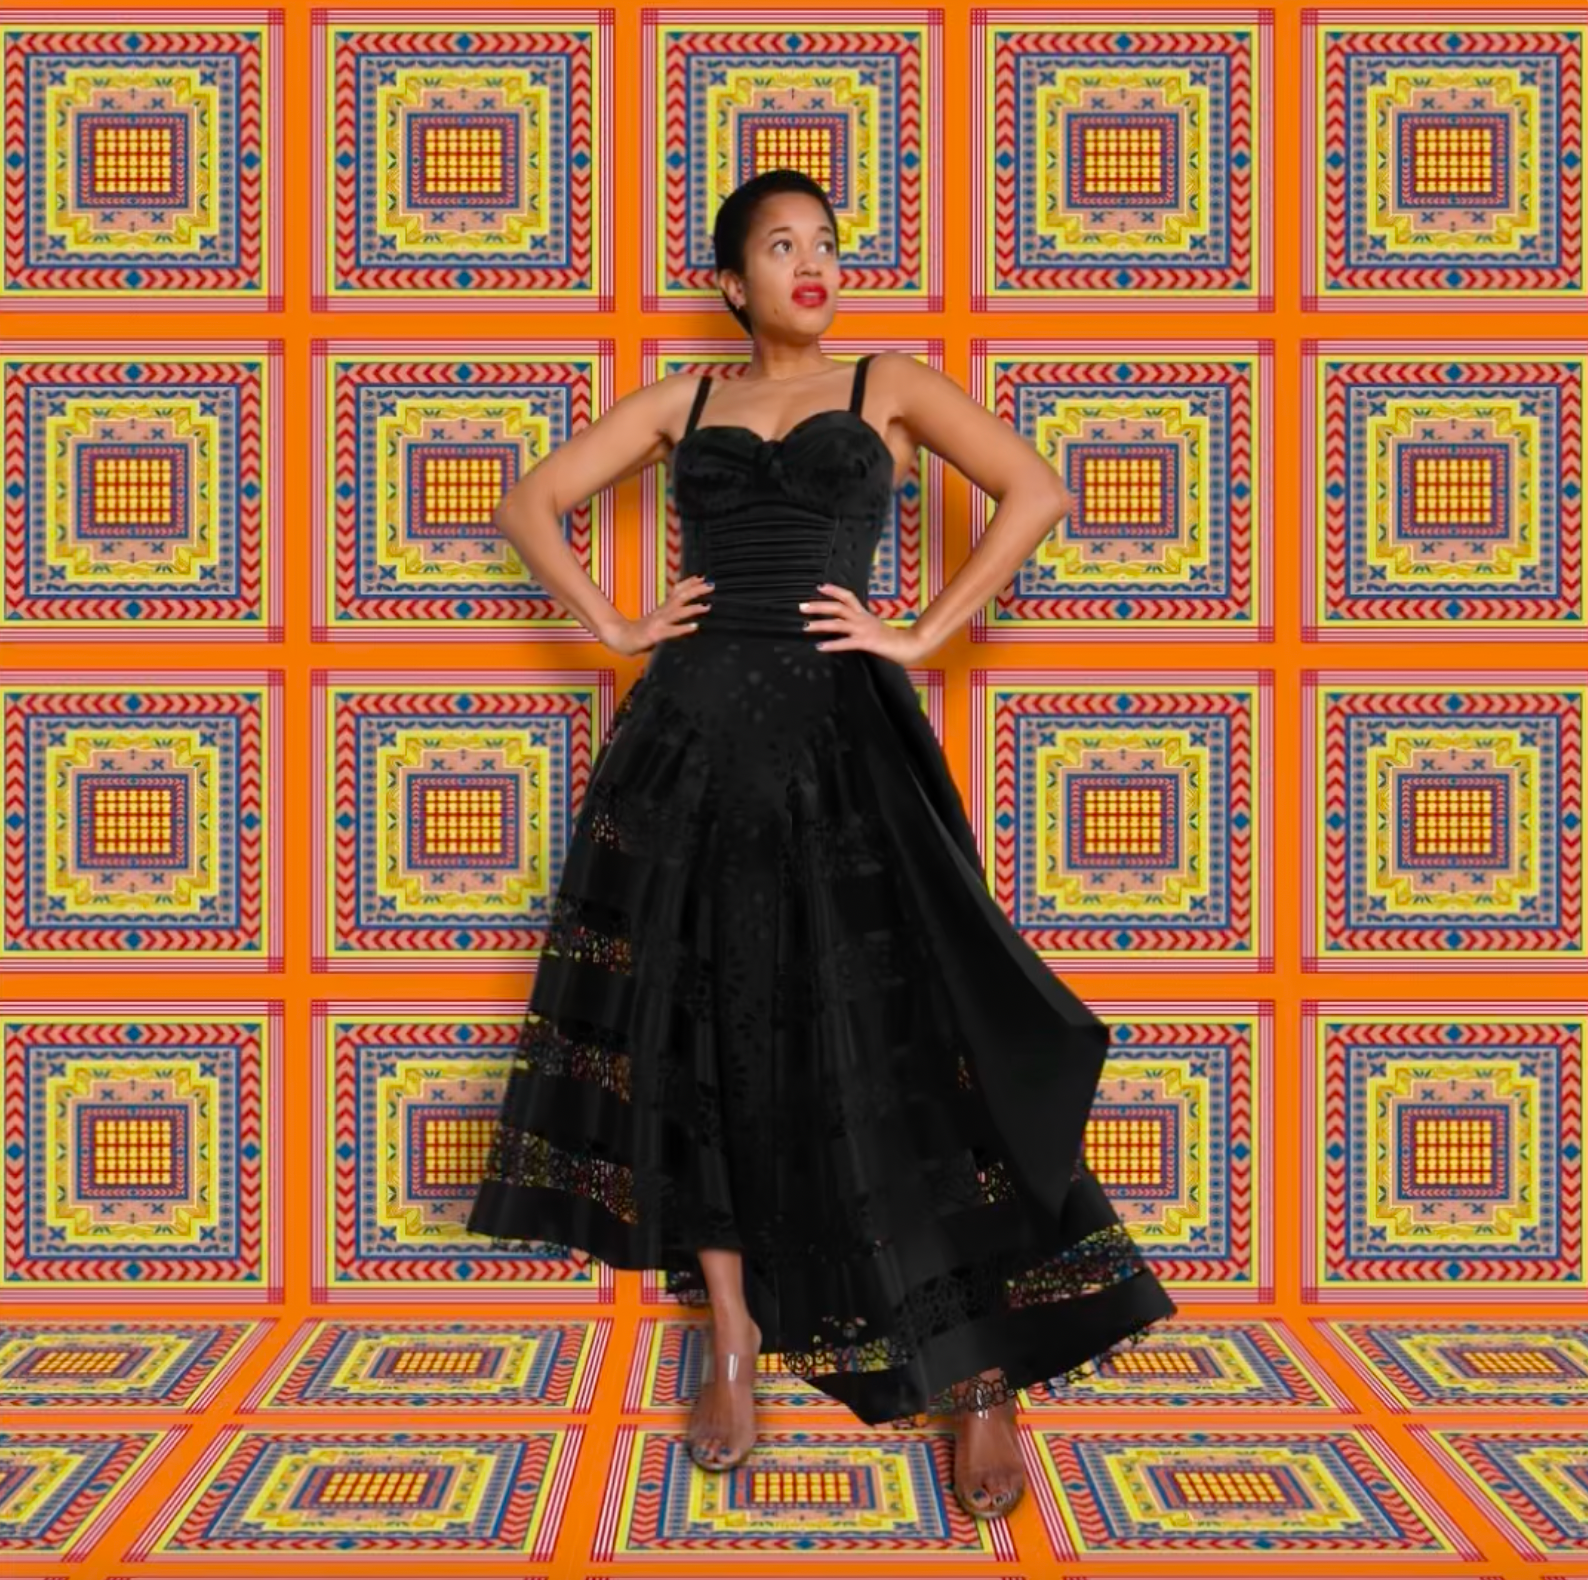 Journalist-turned-designer Anyango Mpinga on her vibrant eponymous label selling sustainable dresses that are irresistibly bold. Black evening dress. Bright orange background.